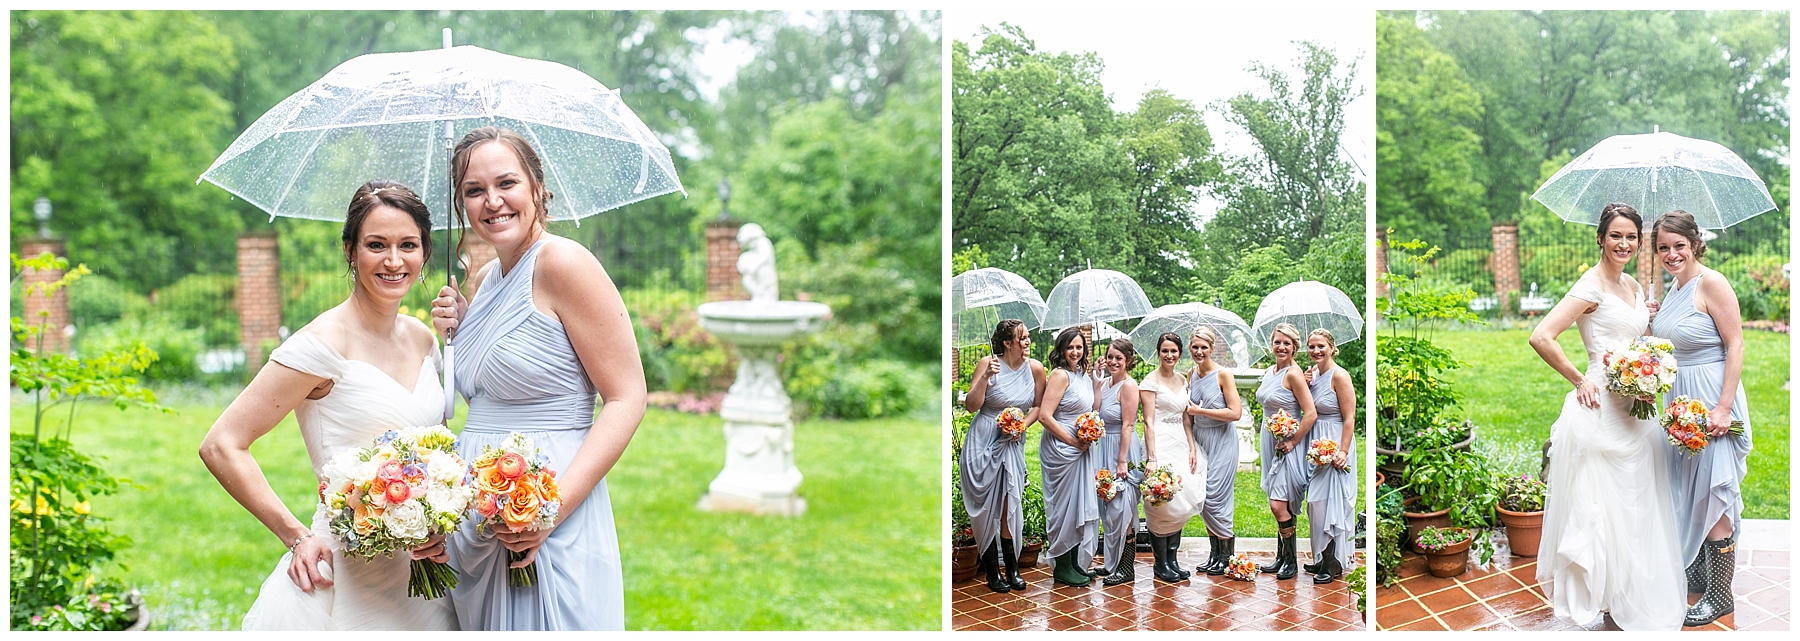 Ashley + Kevin Gramercy Mansion Rainy Day Baltimore Wedding Living Radiant Photography photos_0026.jpg